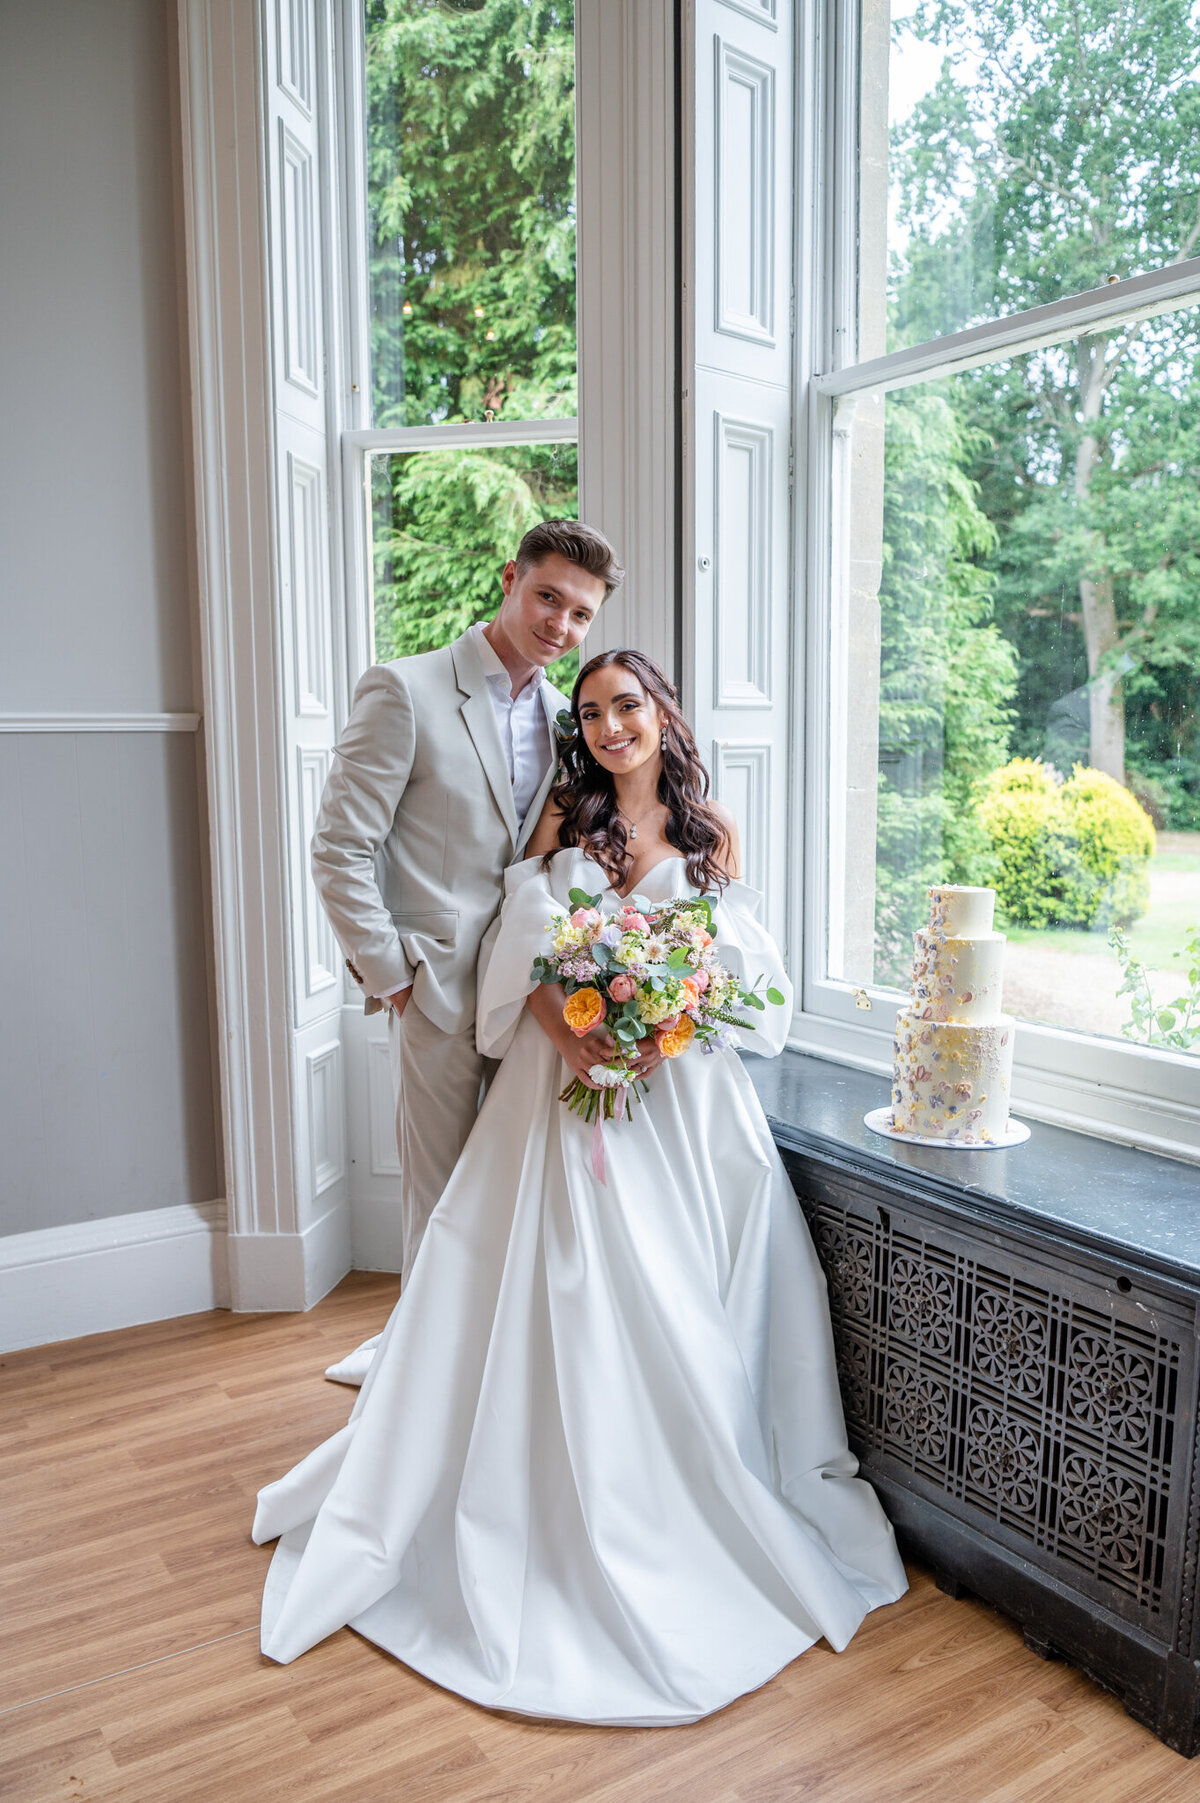 Chloe Bolam - UK Wedding and Engagment Photographer - Swanbourne House Wedding Venue Milton Keynes - Destination Wedding in the UK - 2